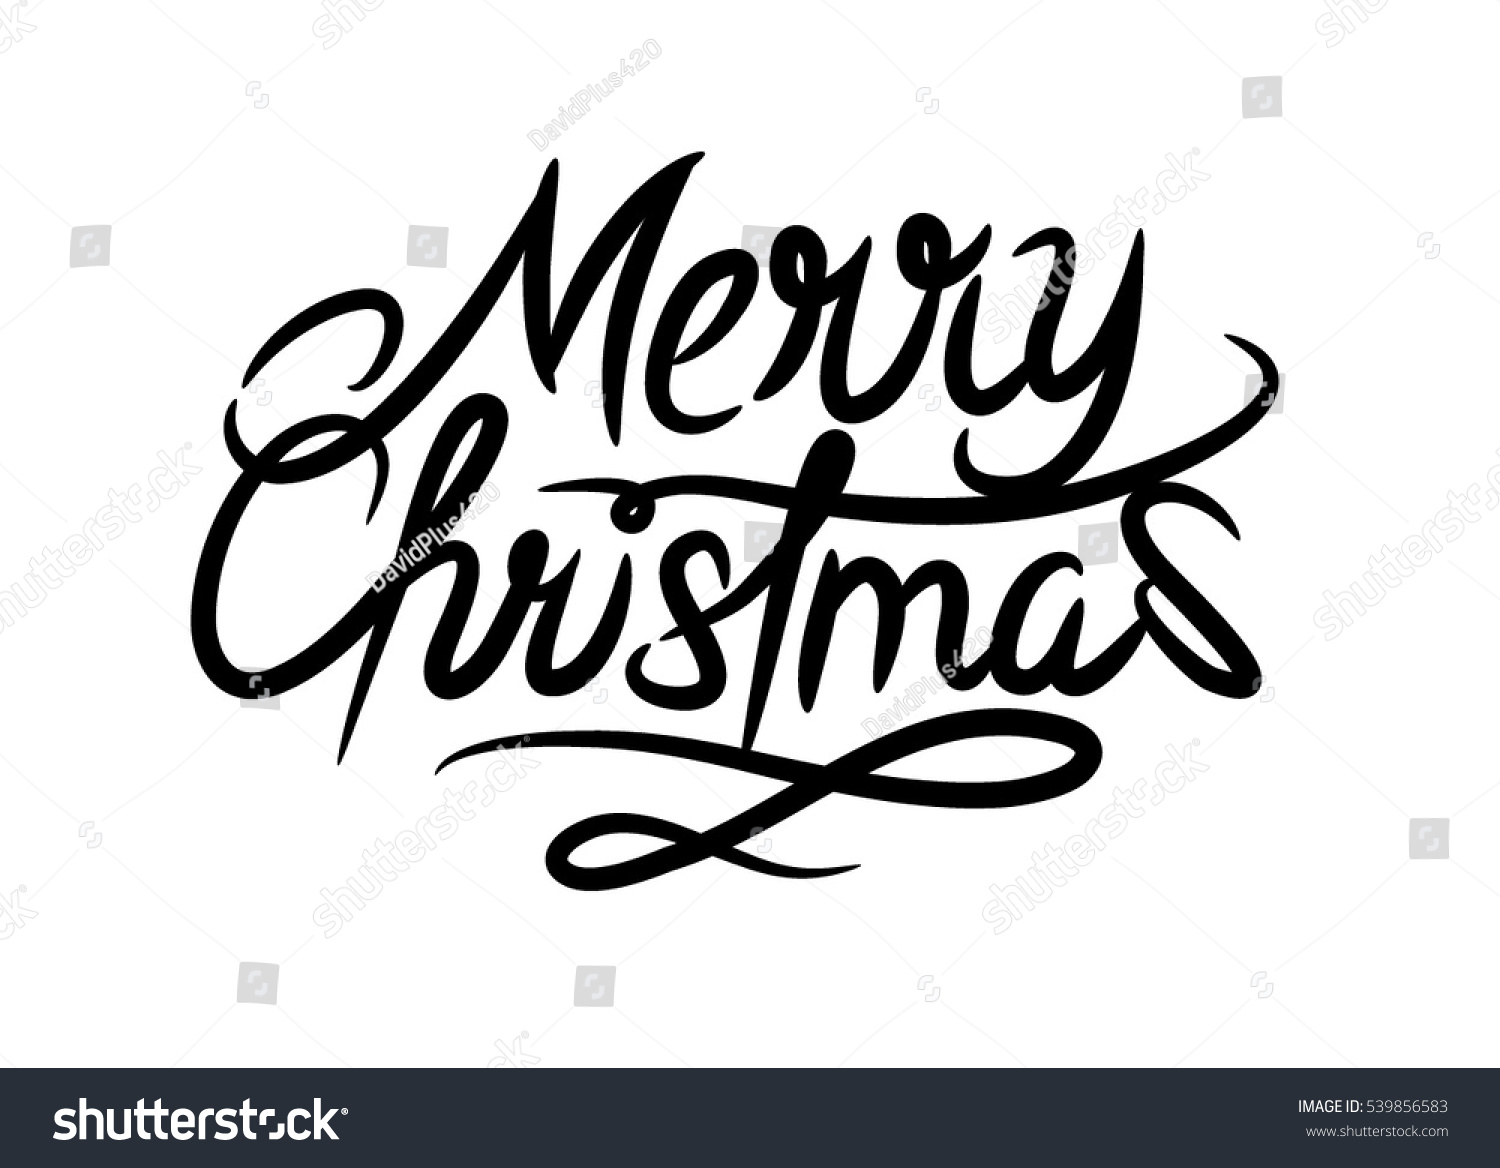 Merry Christmas Vector Illustration - 539856583 : Shutterstock